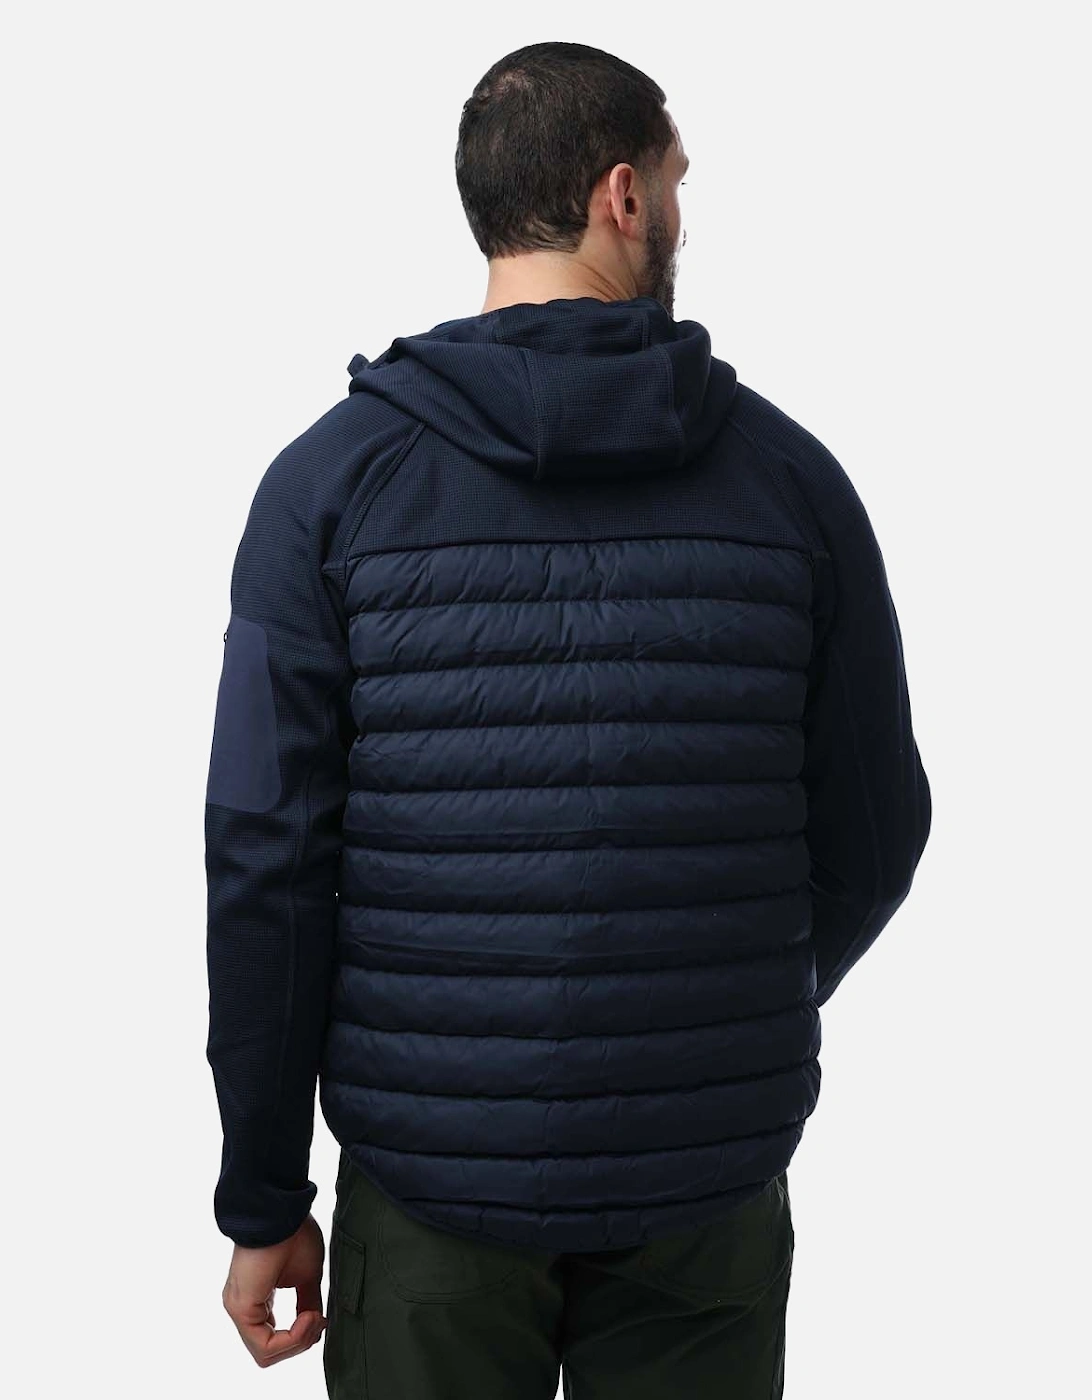 Men's Urban Pravitale Hybrid Jacket